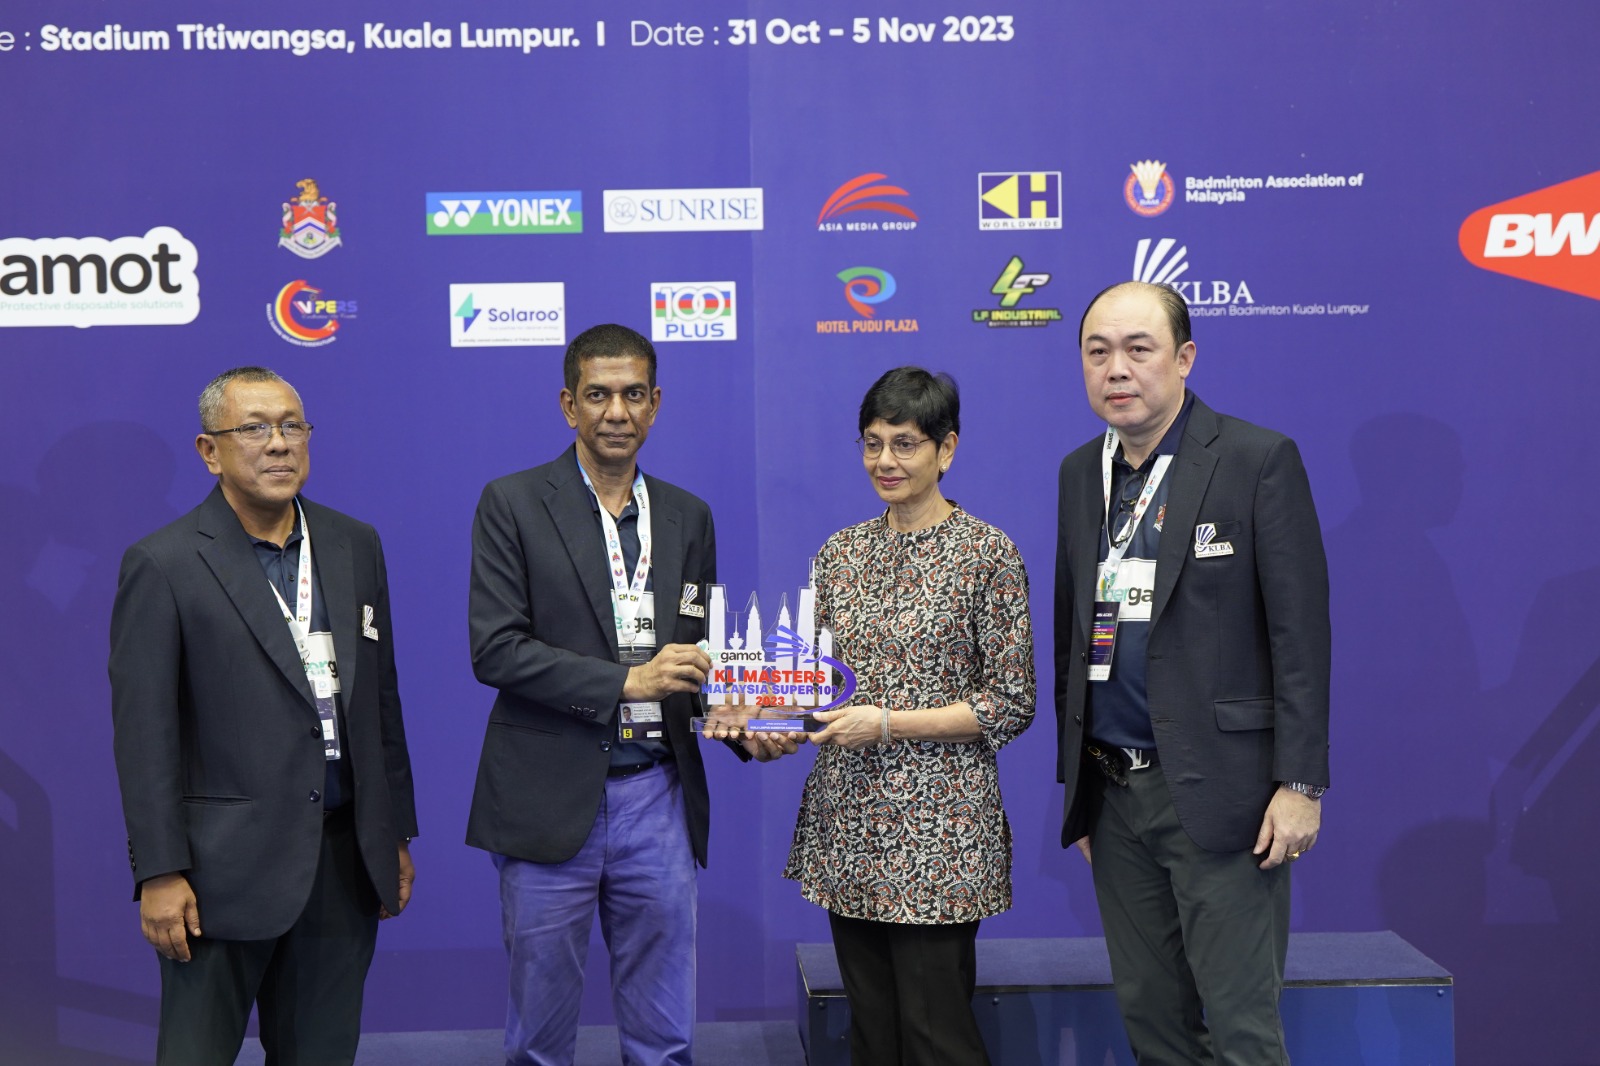 KLBA honours badminton legend Punch Gunalan 